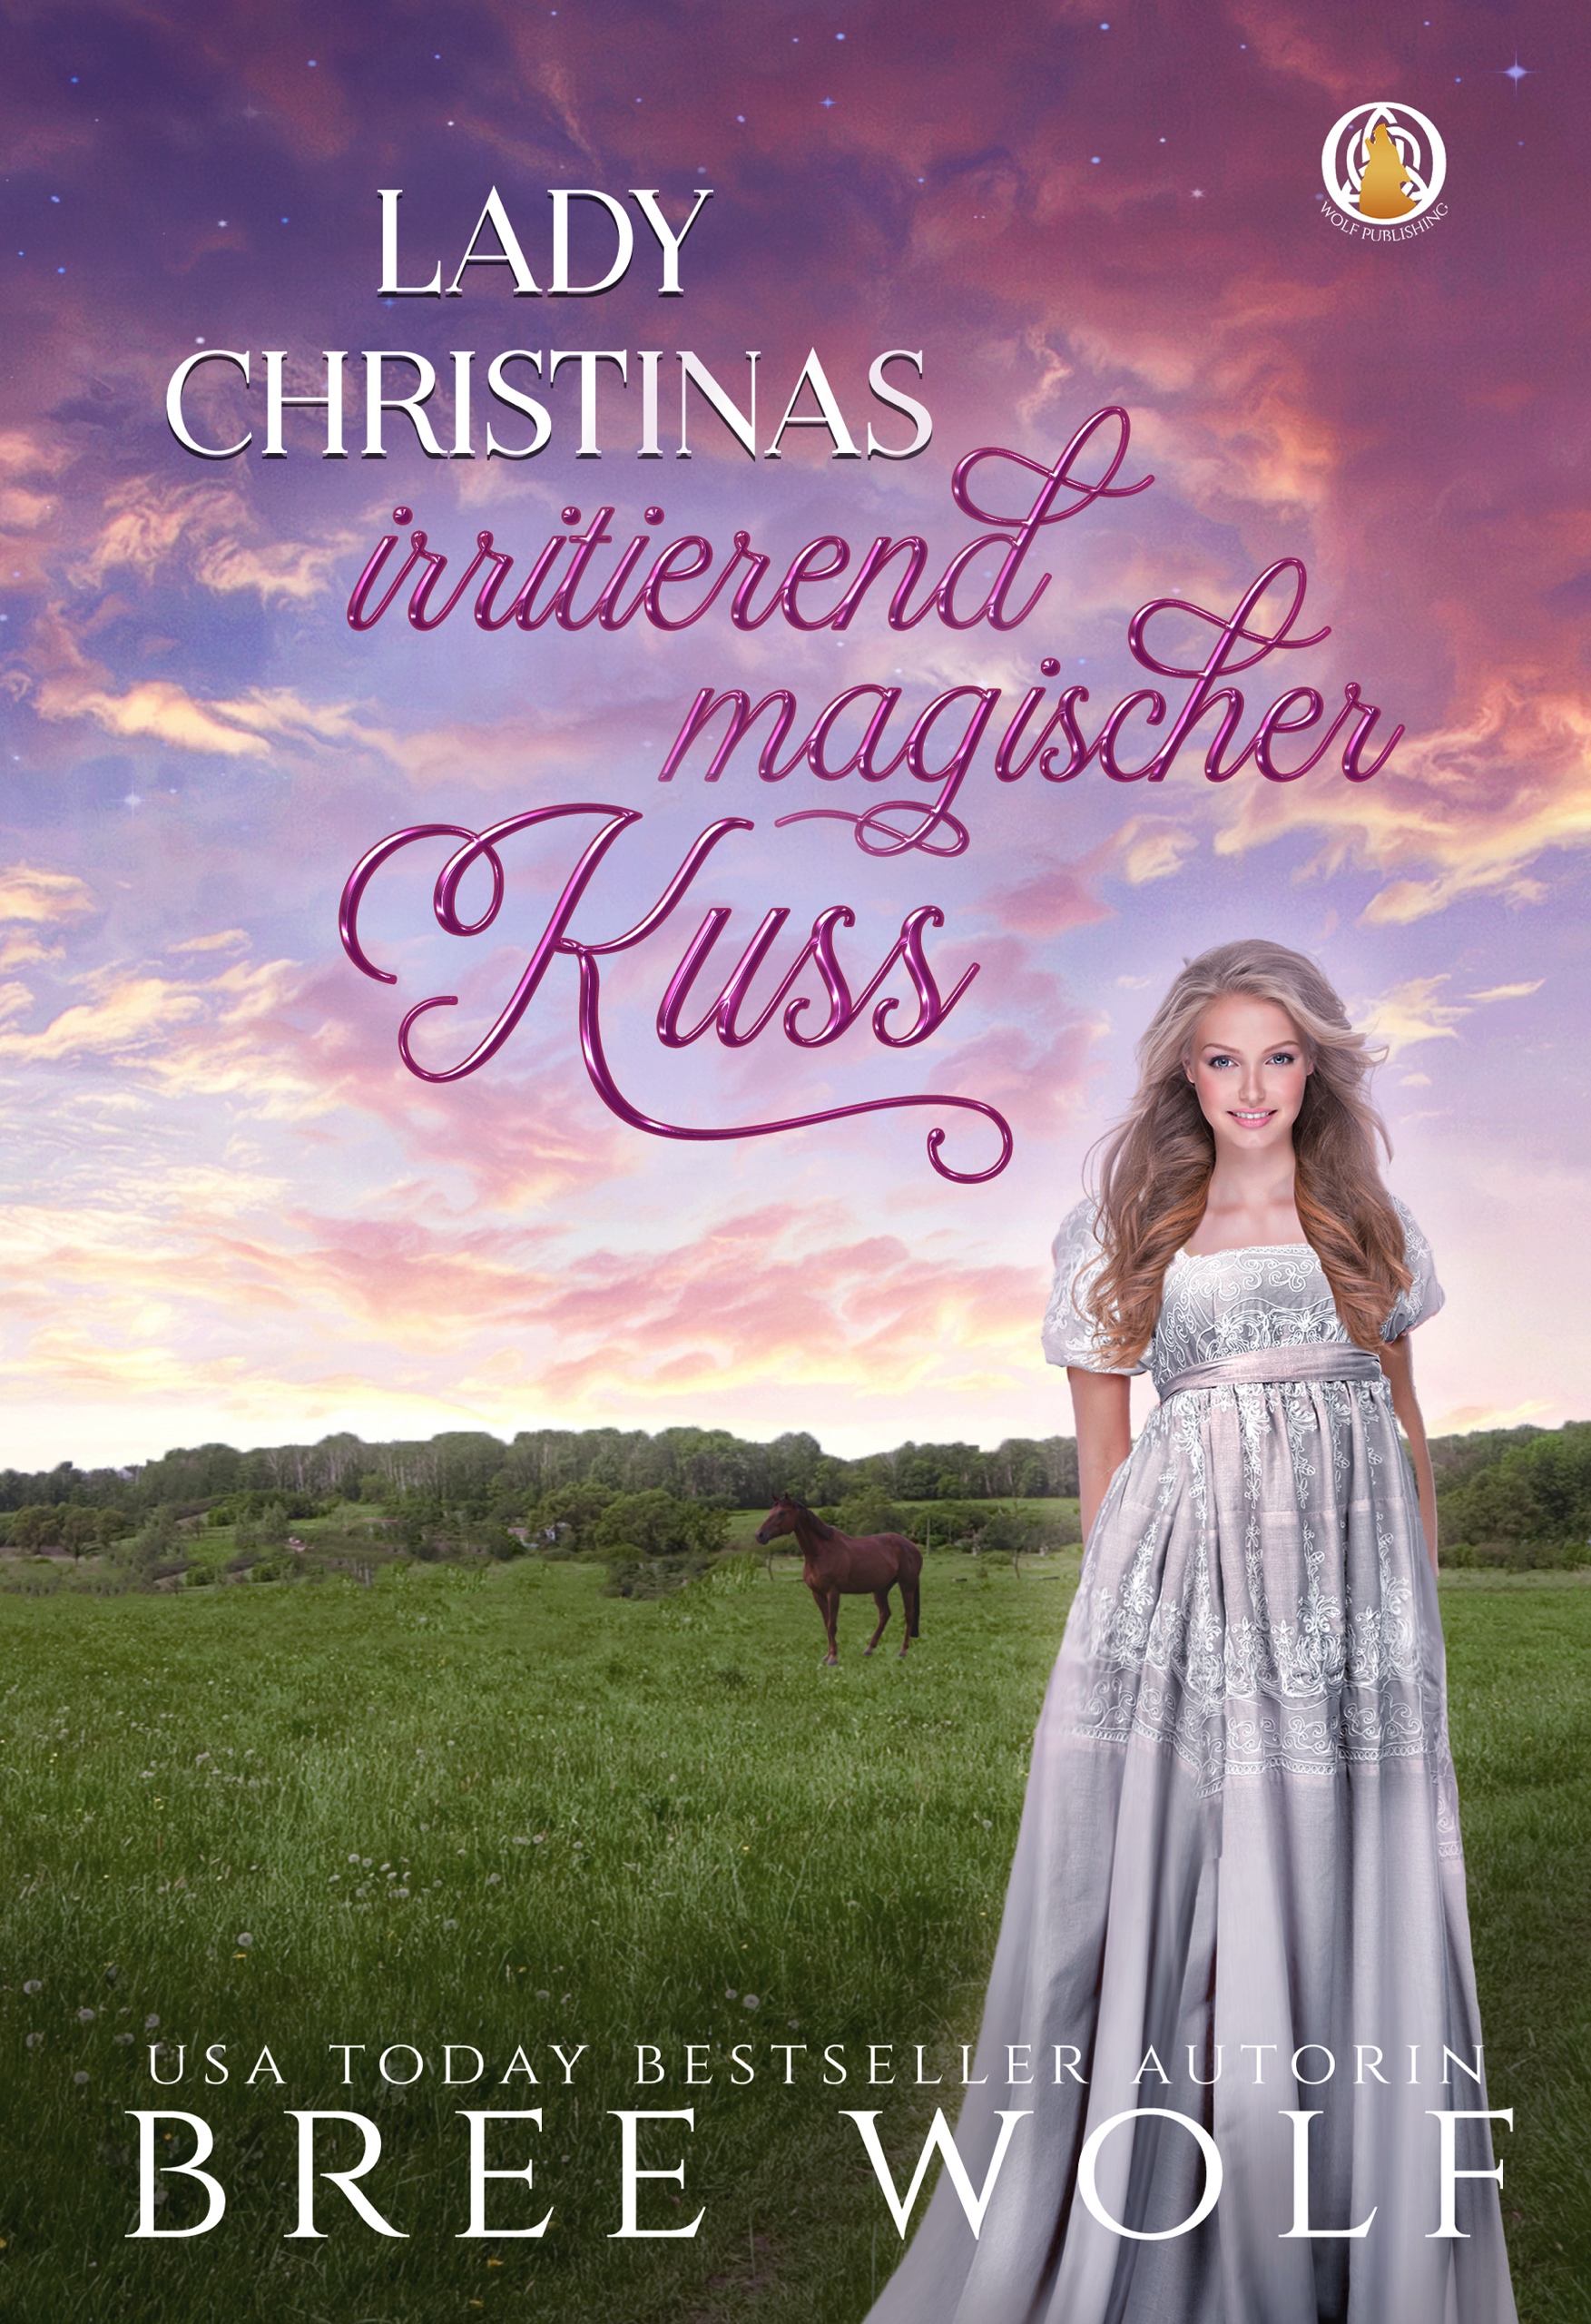 Lady-Christinas-irritierend-magischer-Kuss-Kindle